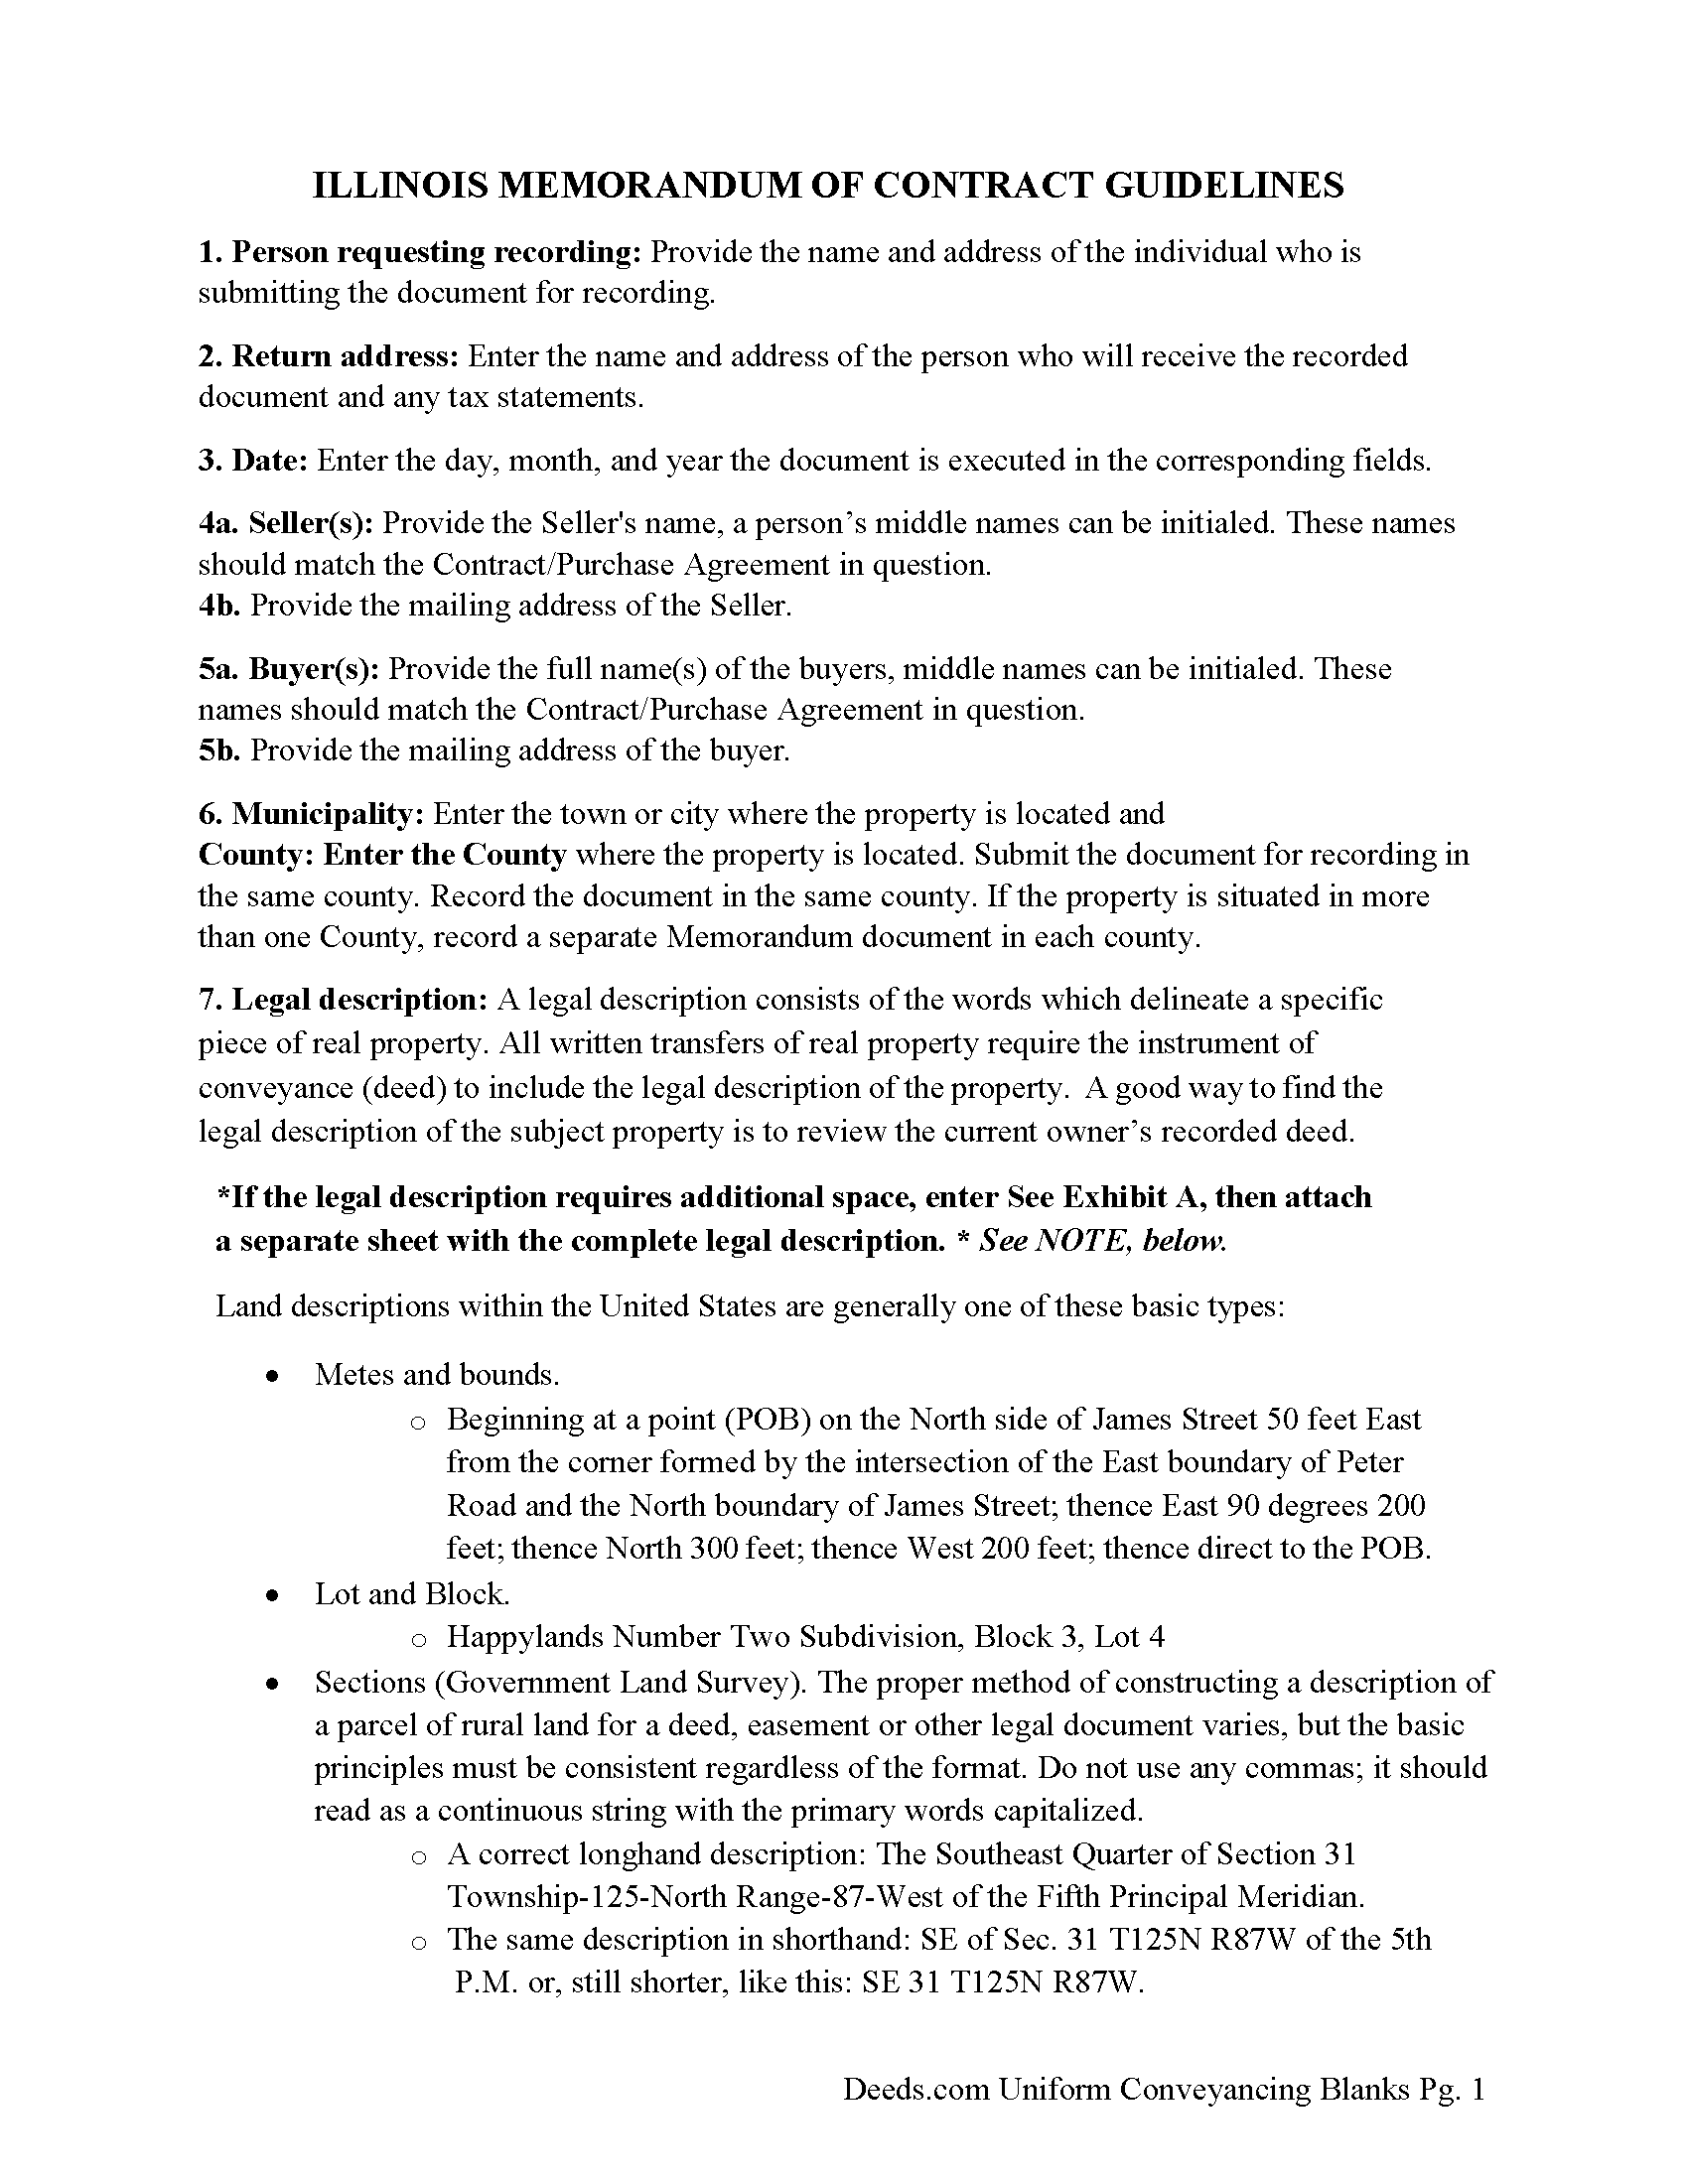 Montgomery County Memorandum of an Installment Sales Contract Guide